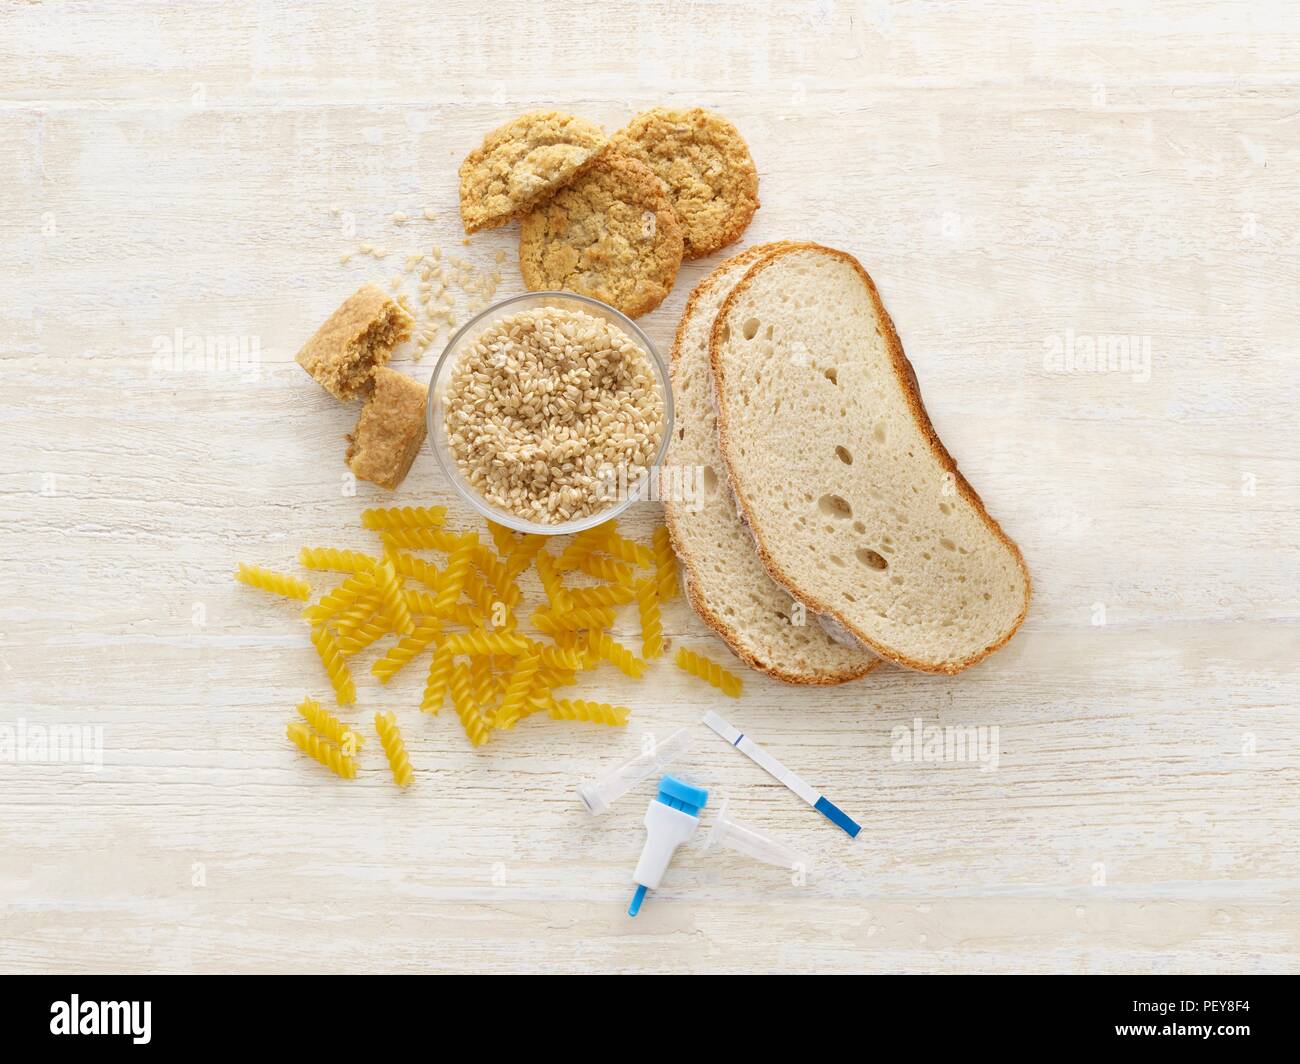 Bread and pasta with celiac test equipment, studio shot. Stock Photo